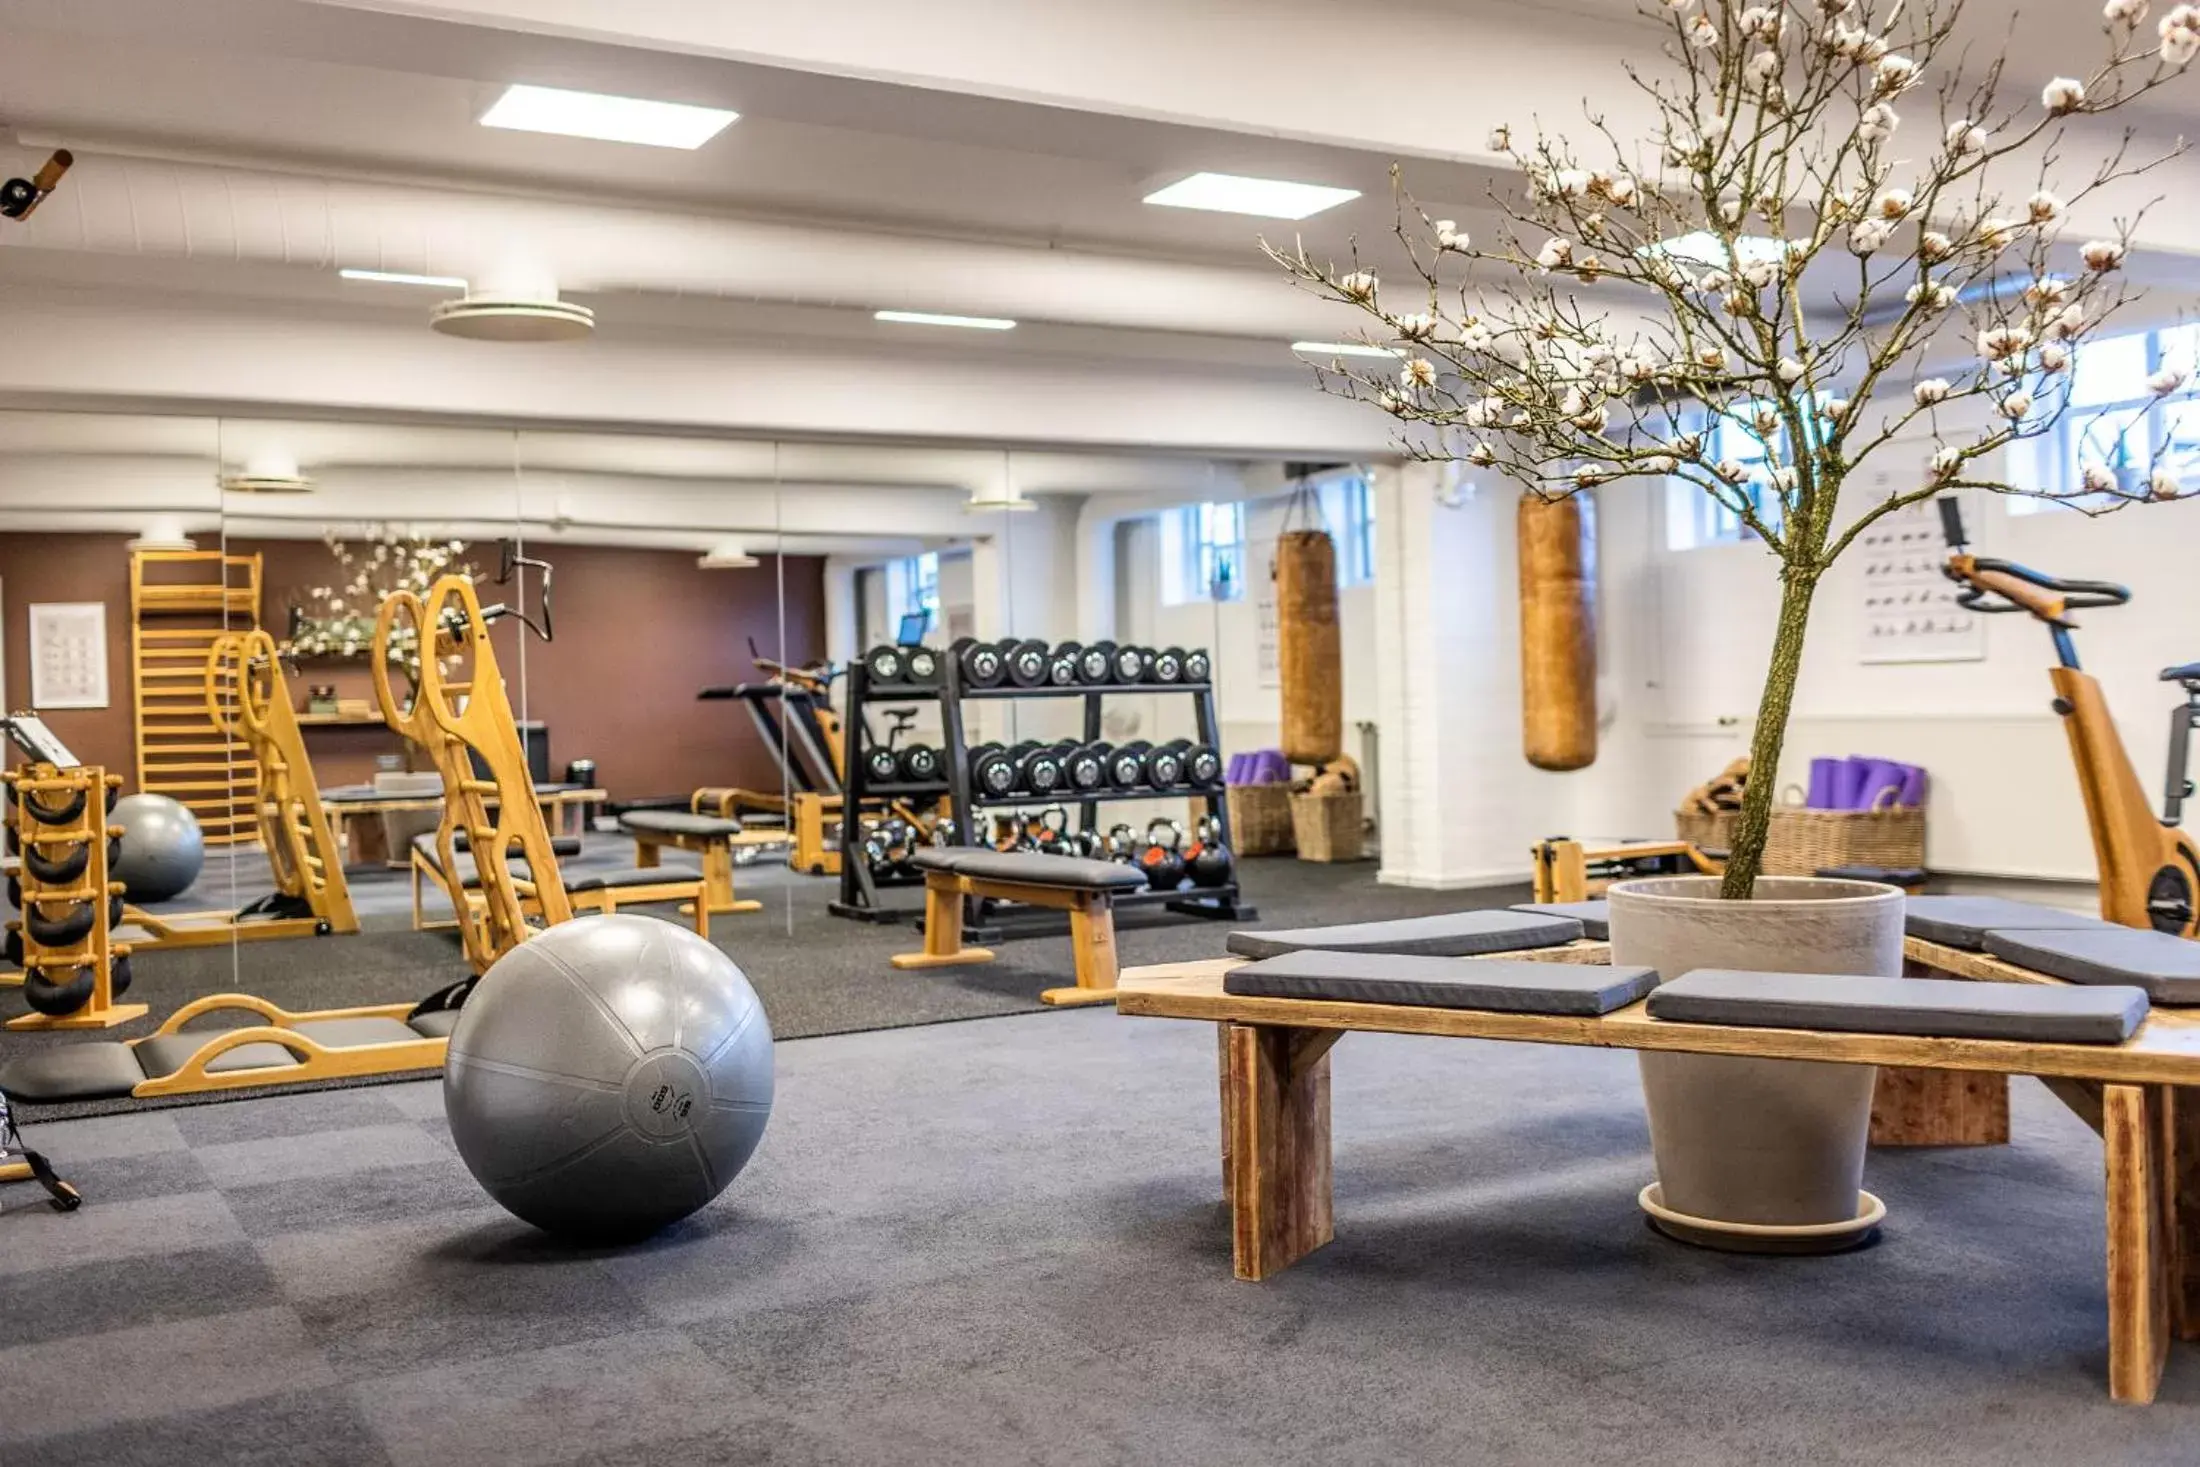 Fitness centre/facilities, Fitness Center/Facilities in The Lodge Billund